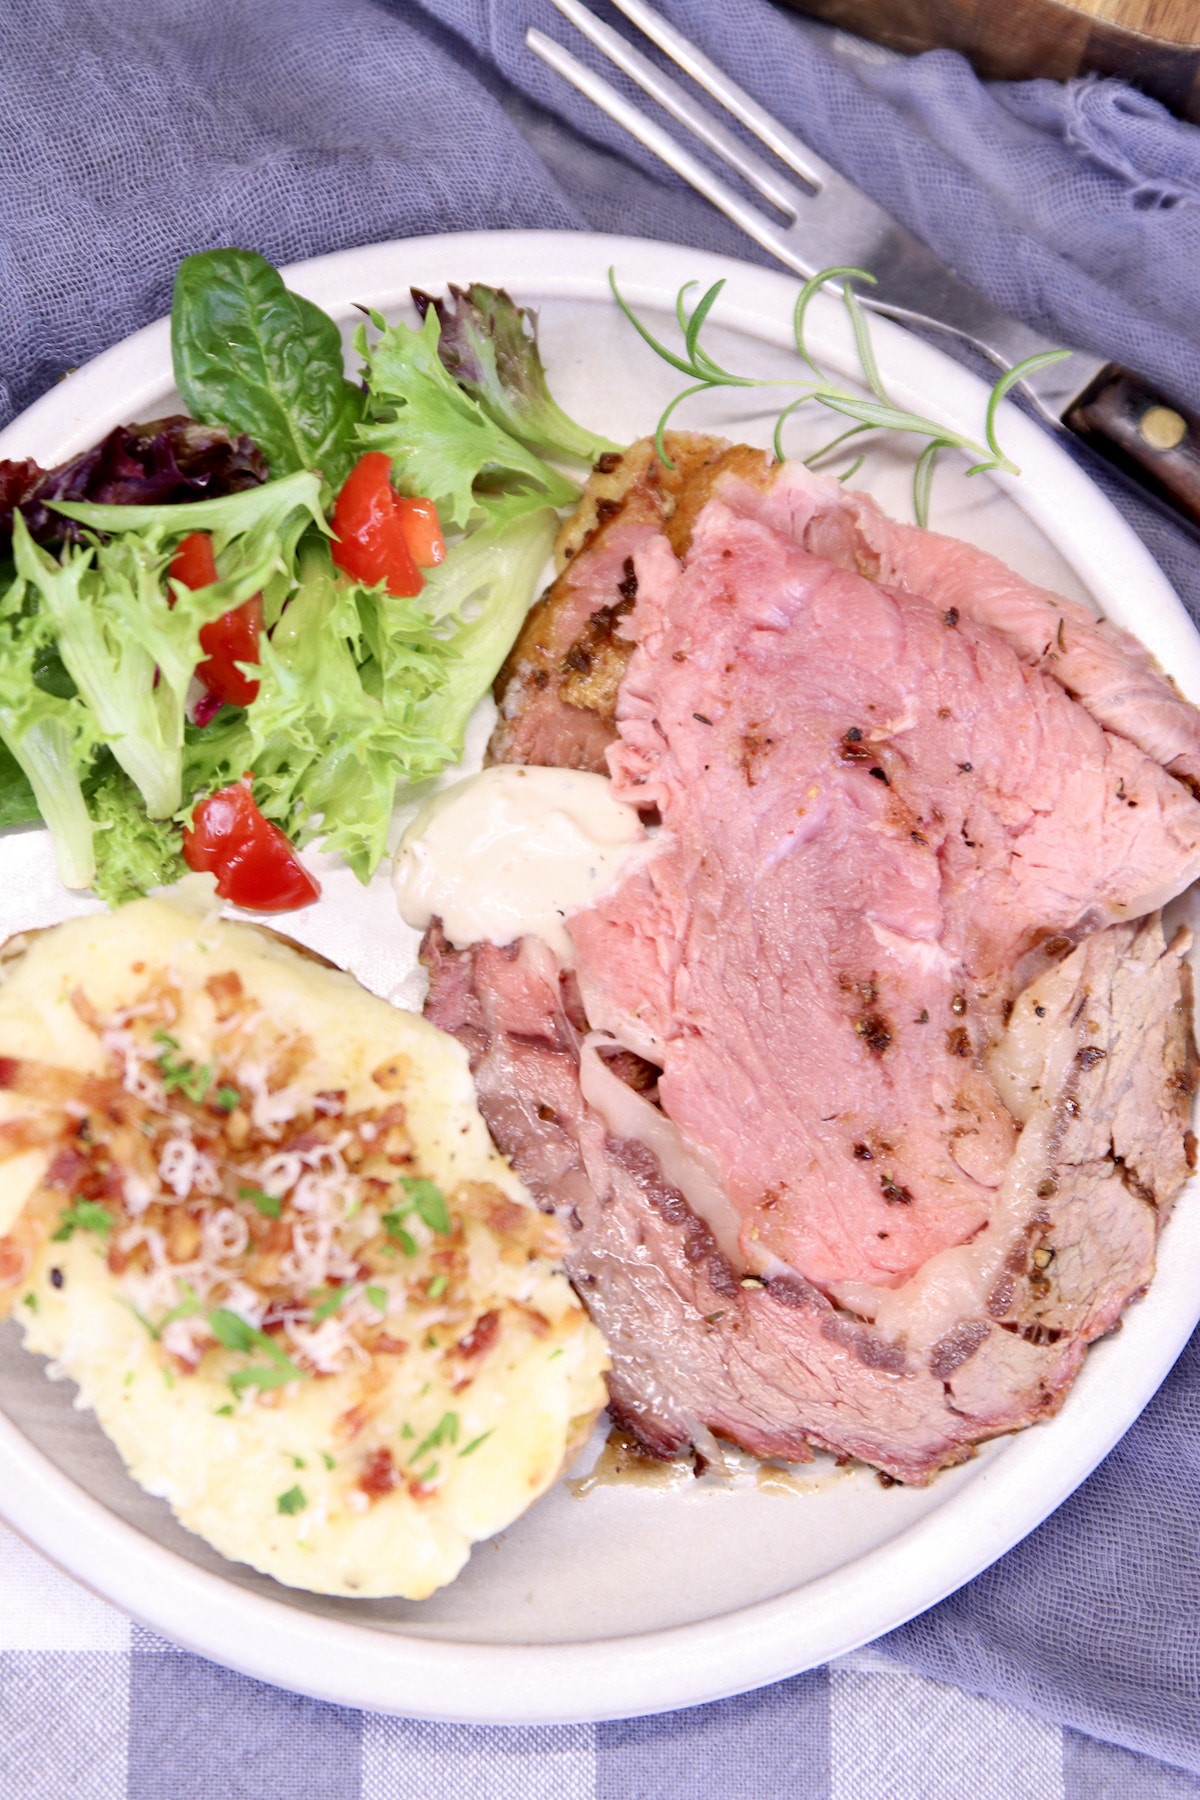 Plate of sliced prime rib, baked potato, salad.